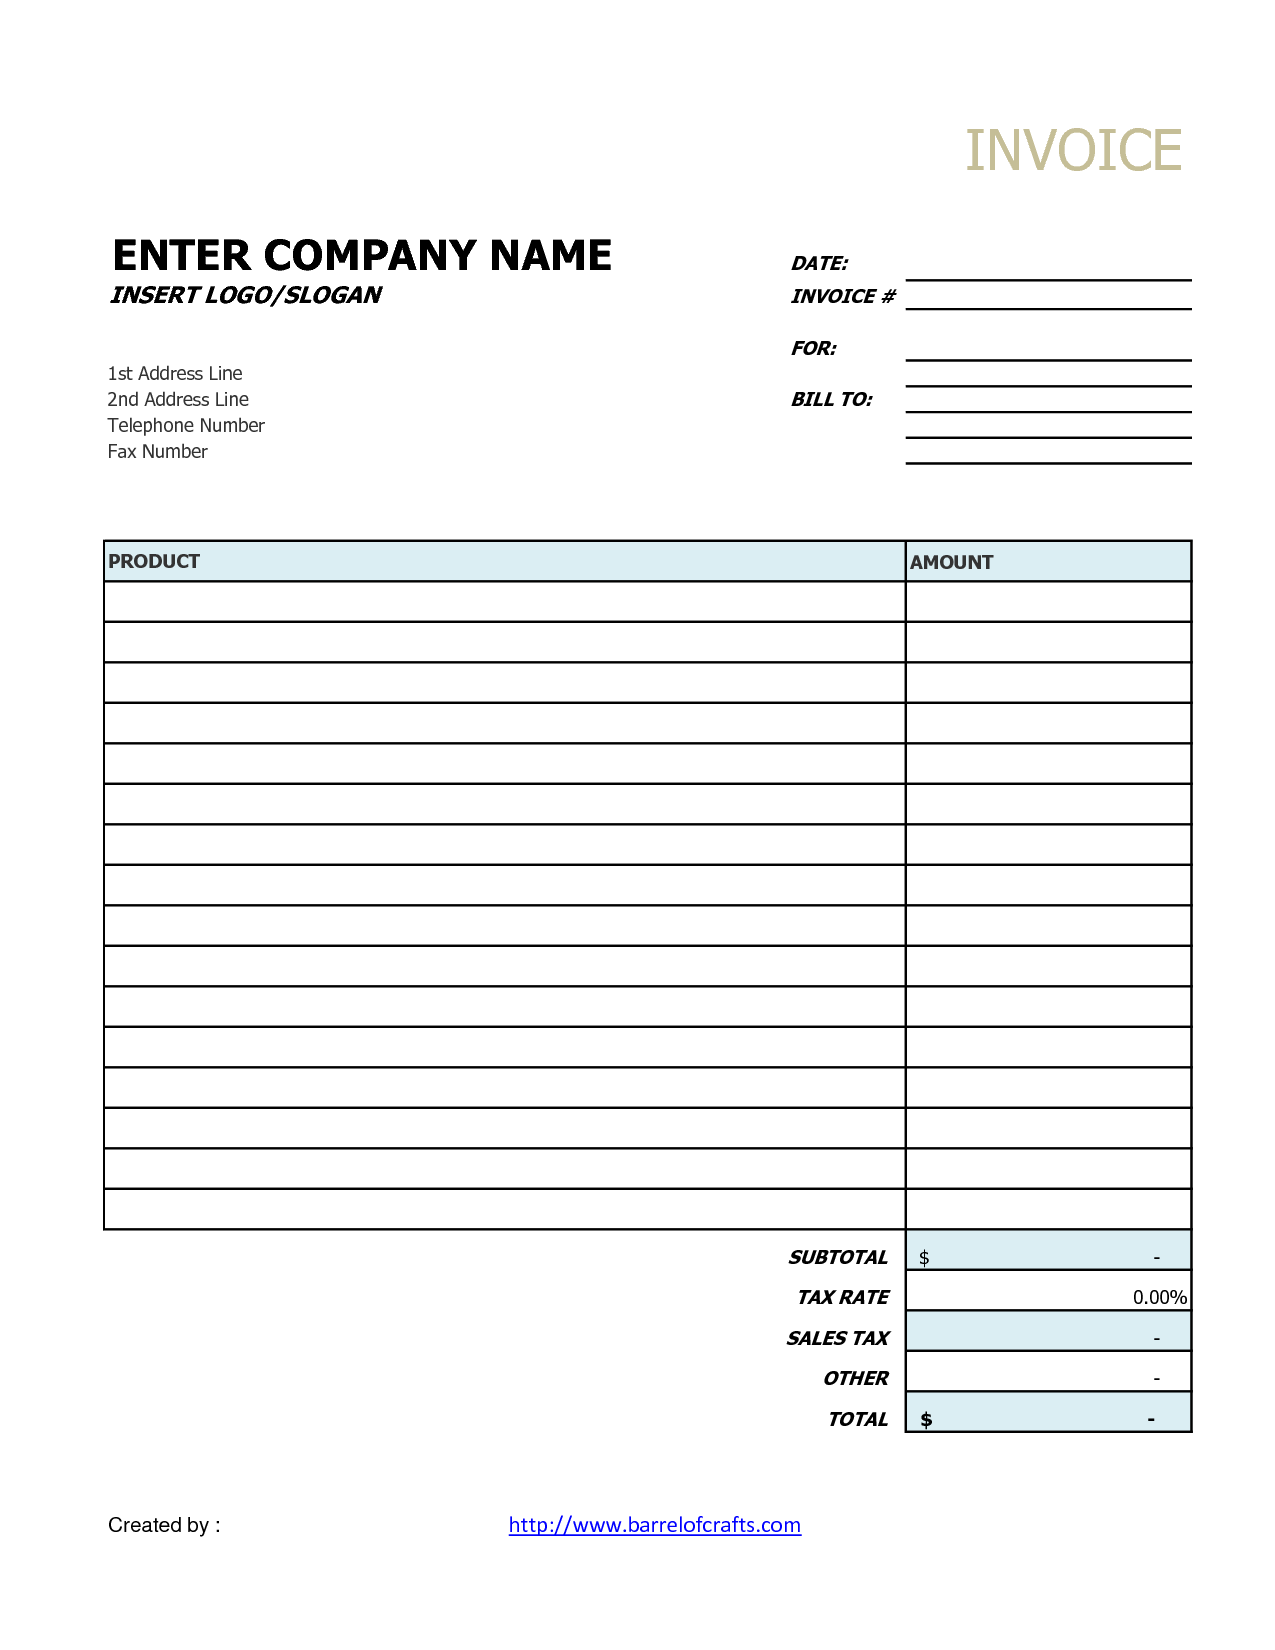 Generic Invoice Form